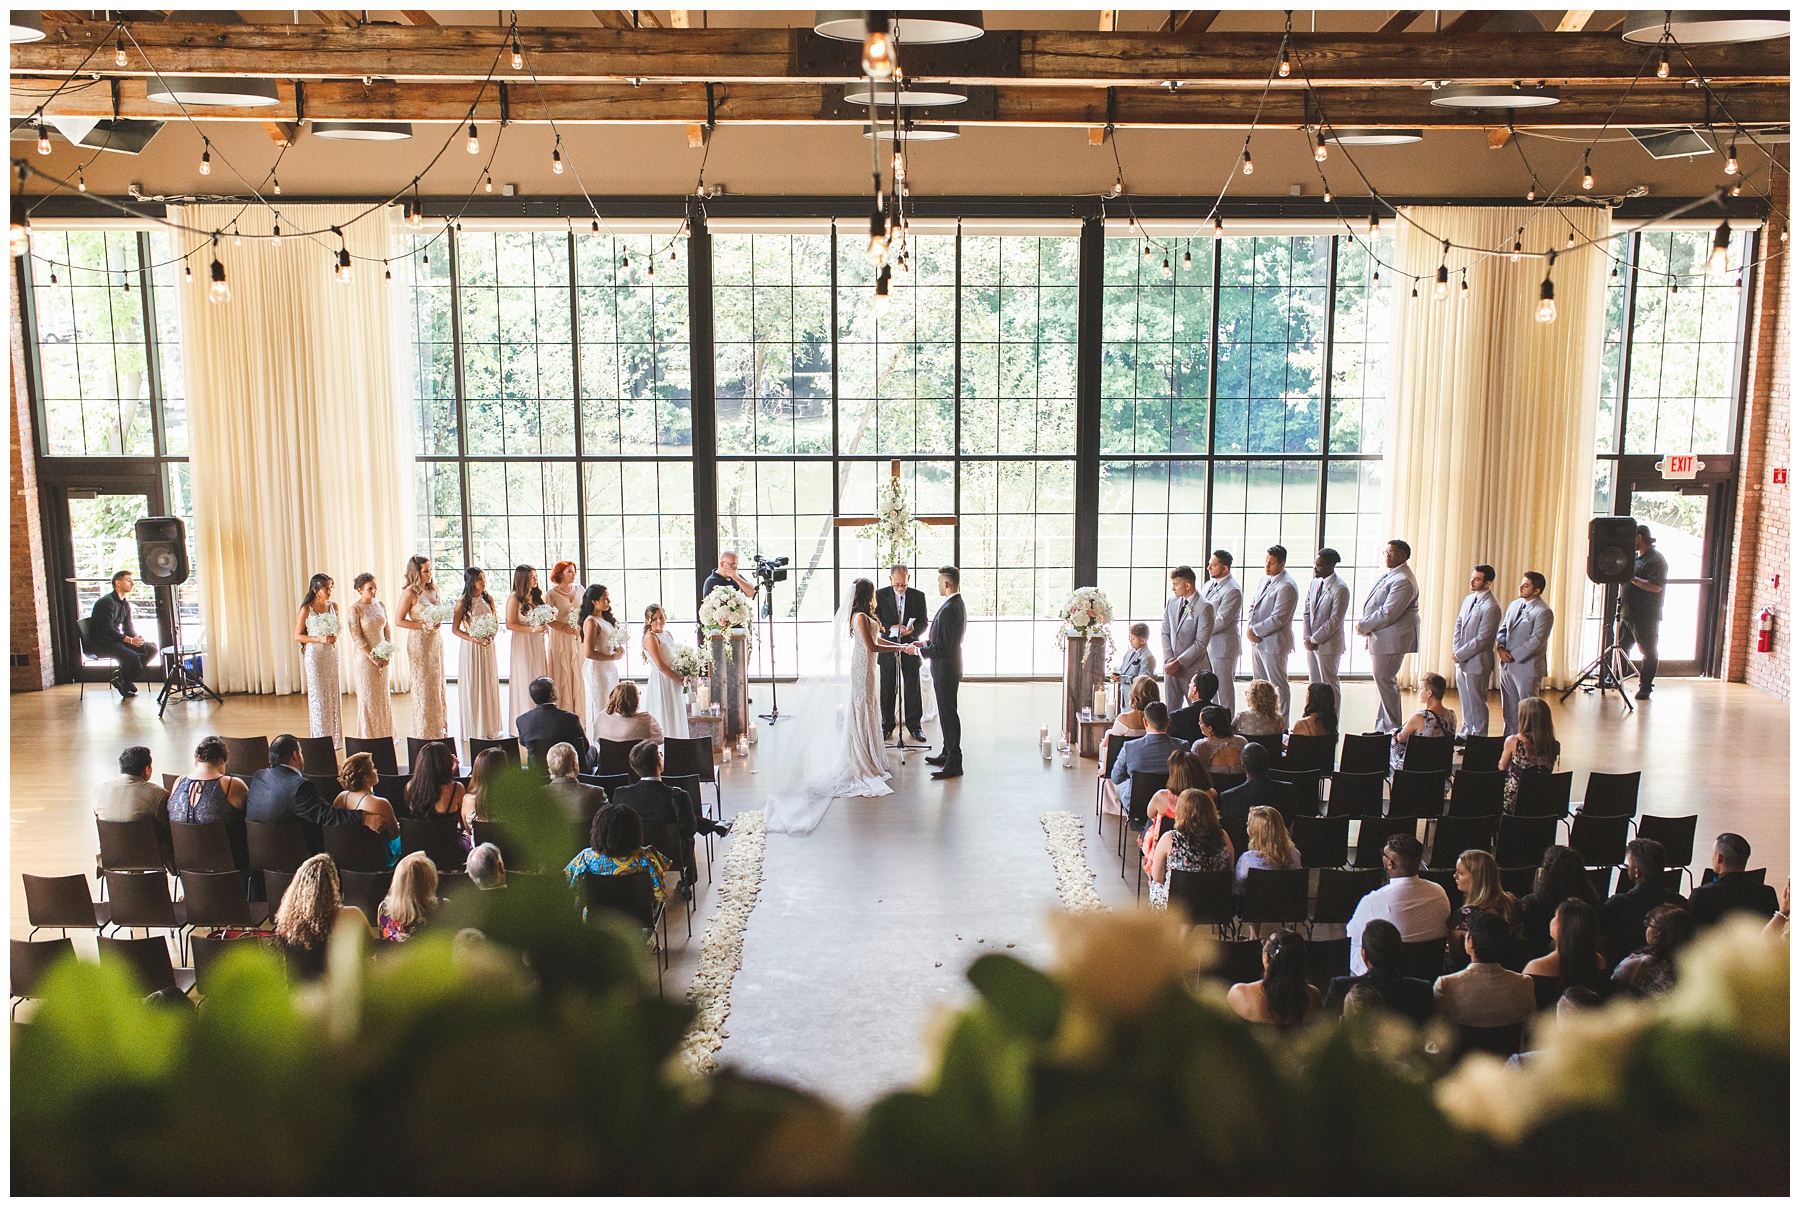 Wedding ceremony photo taken by Miranda Renee Photography